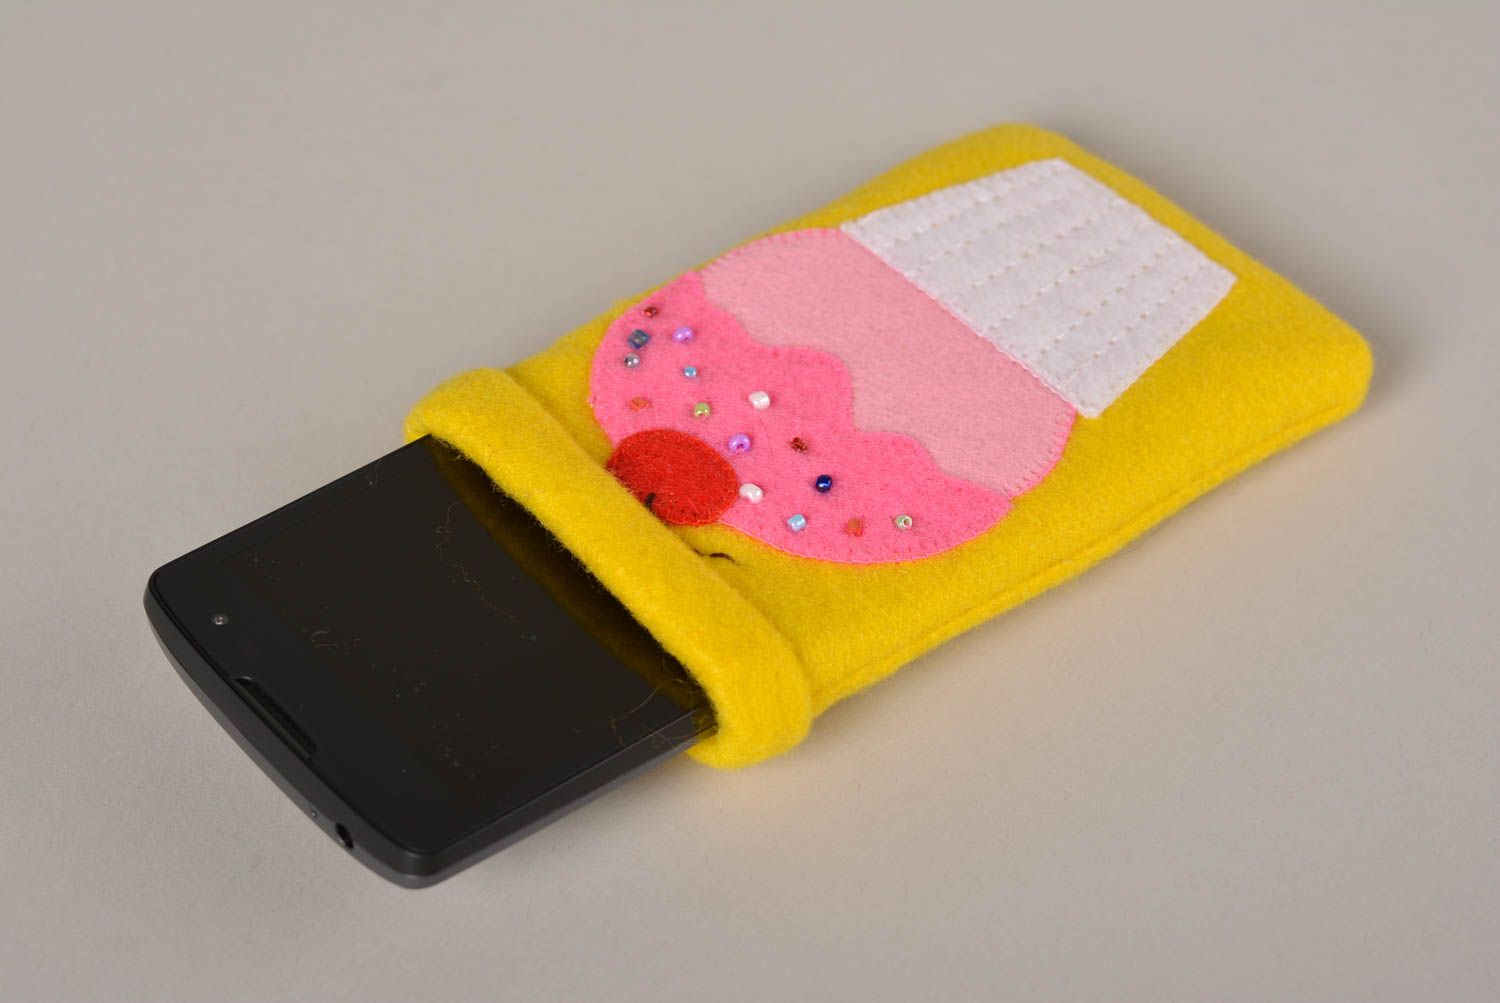 Étui smartphone fait main Accessoire smartphone jaune avec cake Cadeau original photo 2